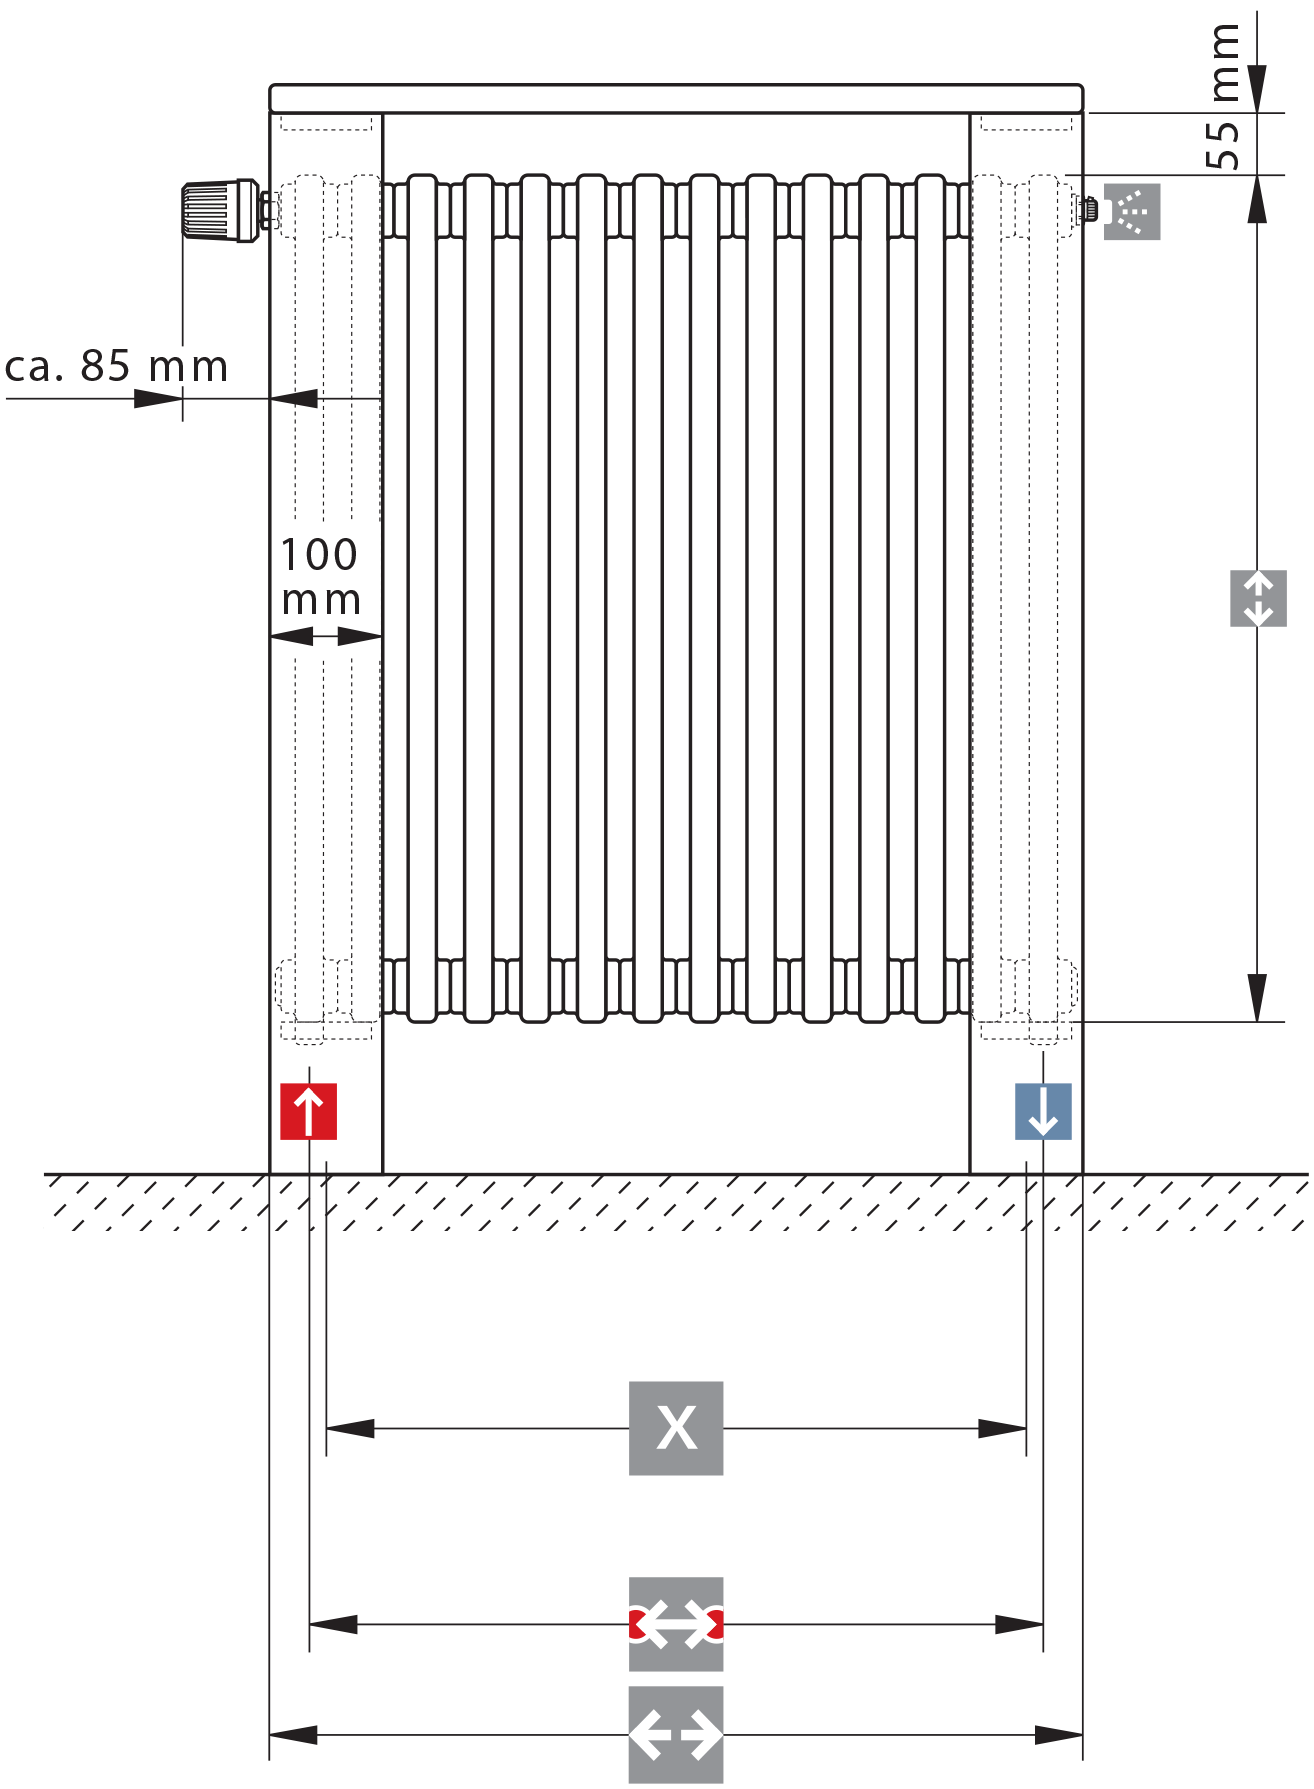 LASERLINE architecture bar dimensions